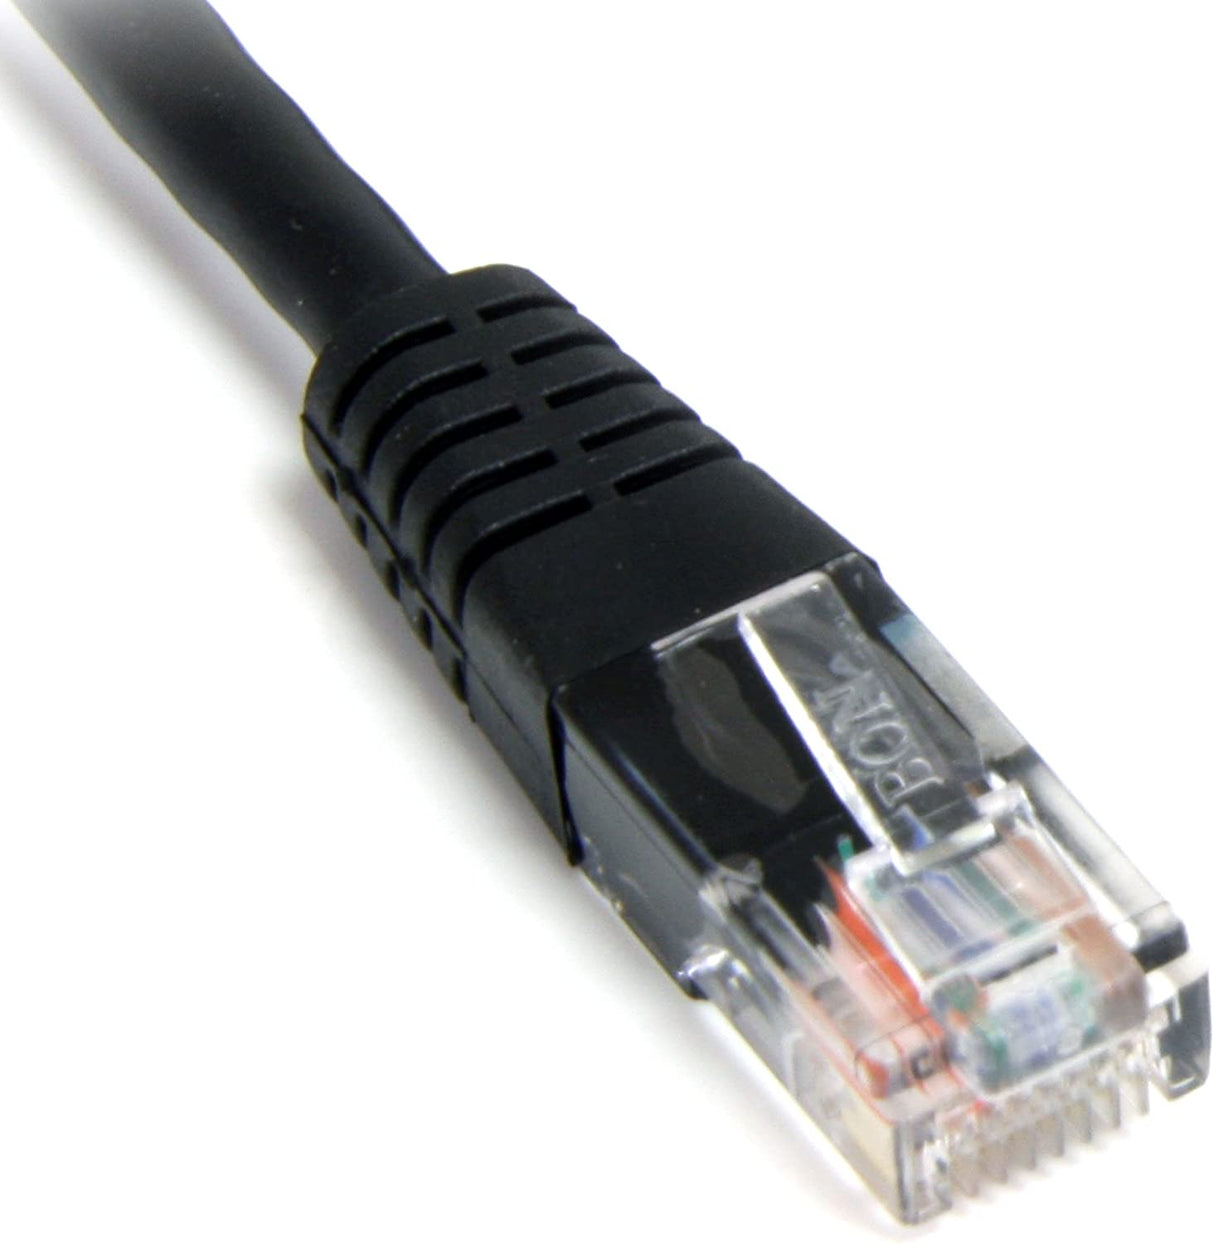 StarTech.com Cat5e Ethernet Cable - 2 ft - Black - Patch Cable - Molded Cat5e Cable - Short Network Cable - Ethernet Cord - Cat 5e Cable - 2ft (M45PATCH2BK) 2 ft / 0.5m Black